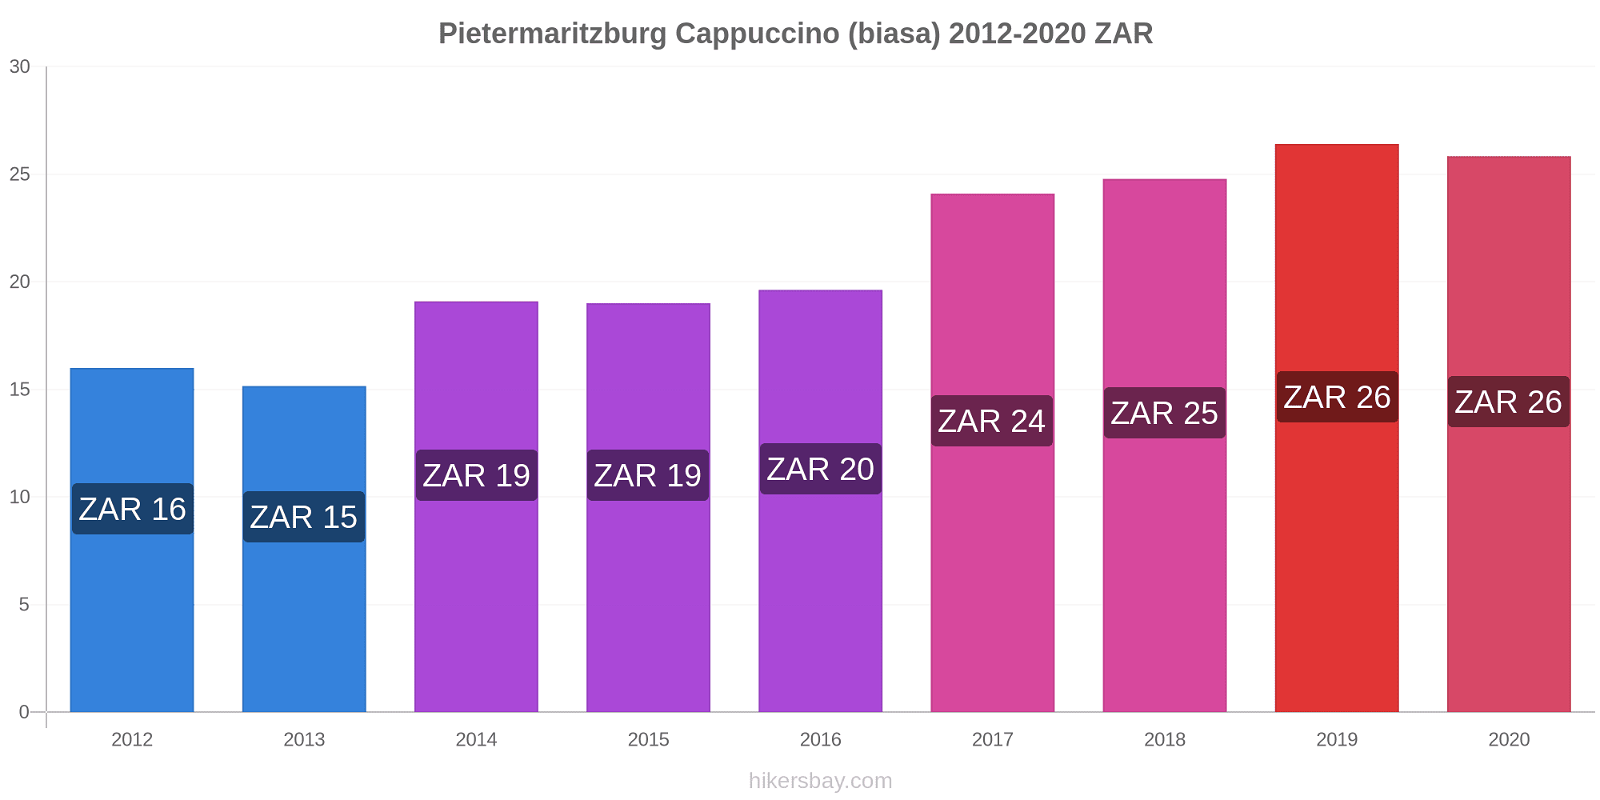 Pietermaritzburg perubahan harga Cappuccino (biasa) hikersbay.com